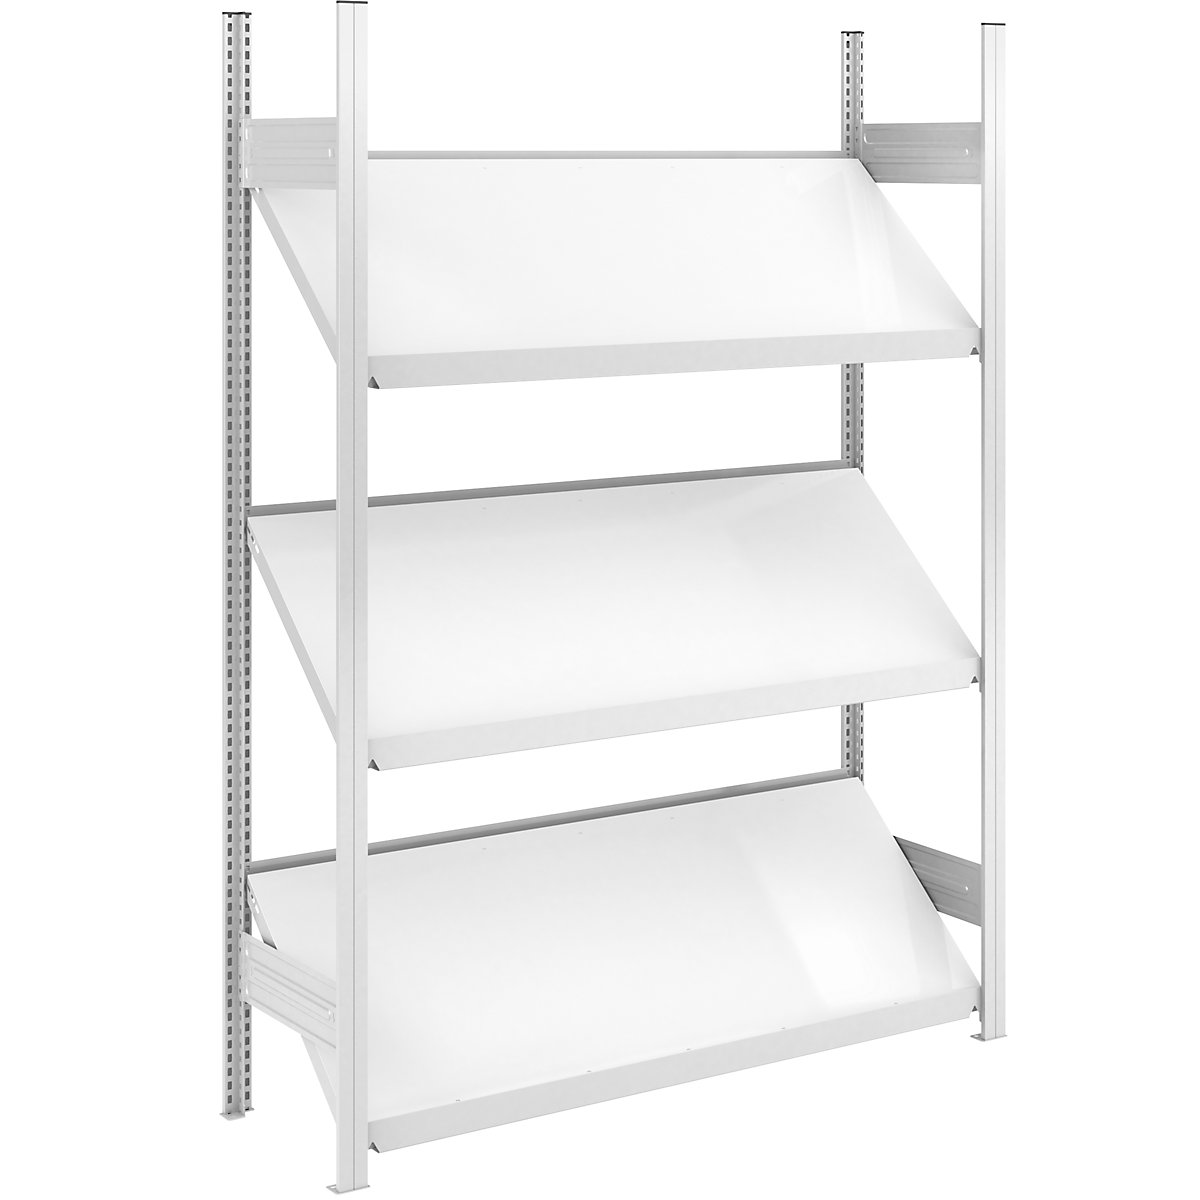 Slanted shelf unit – hofe, shelf unit height 2000 mm, shelf width 1300 mm, standard shelf unit, light grey RAL 7035